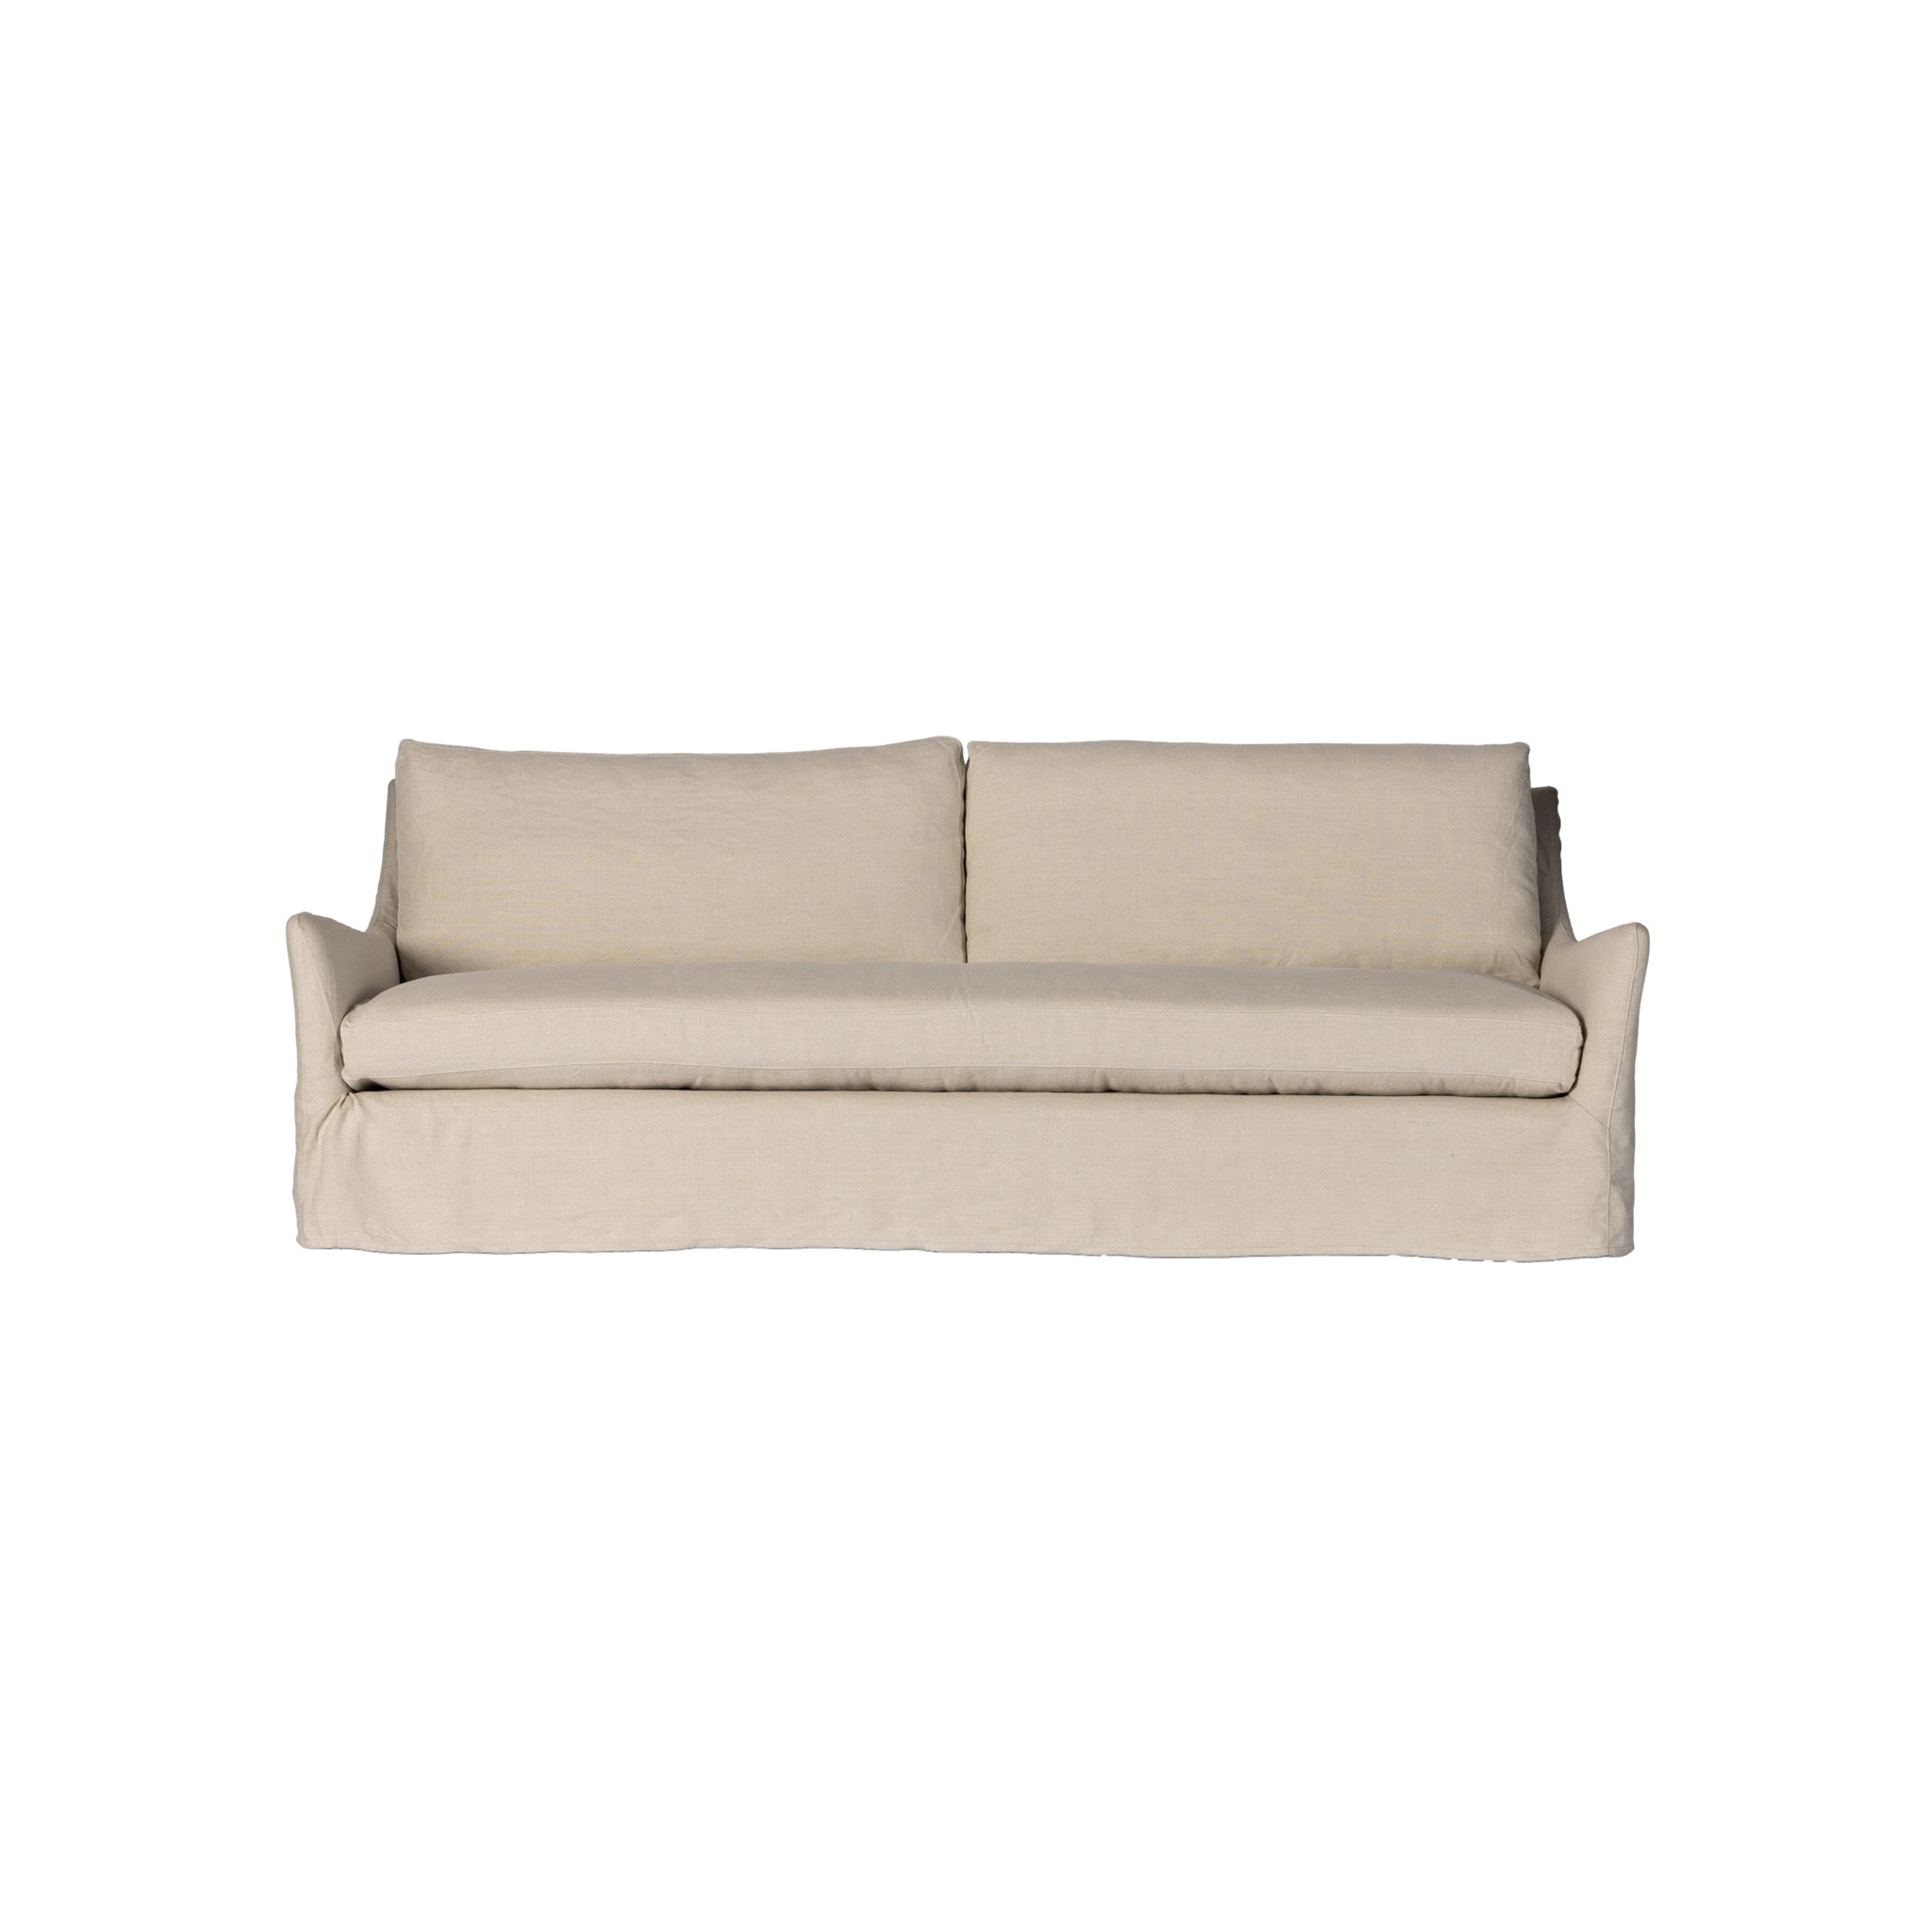 Monette Sofa in Natural